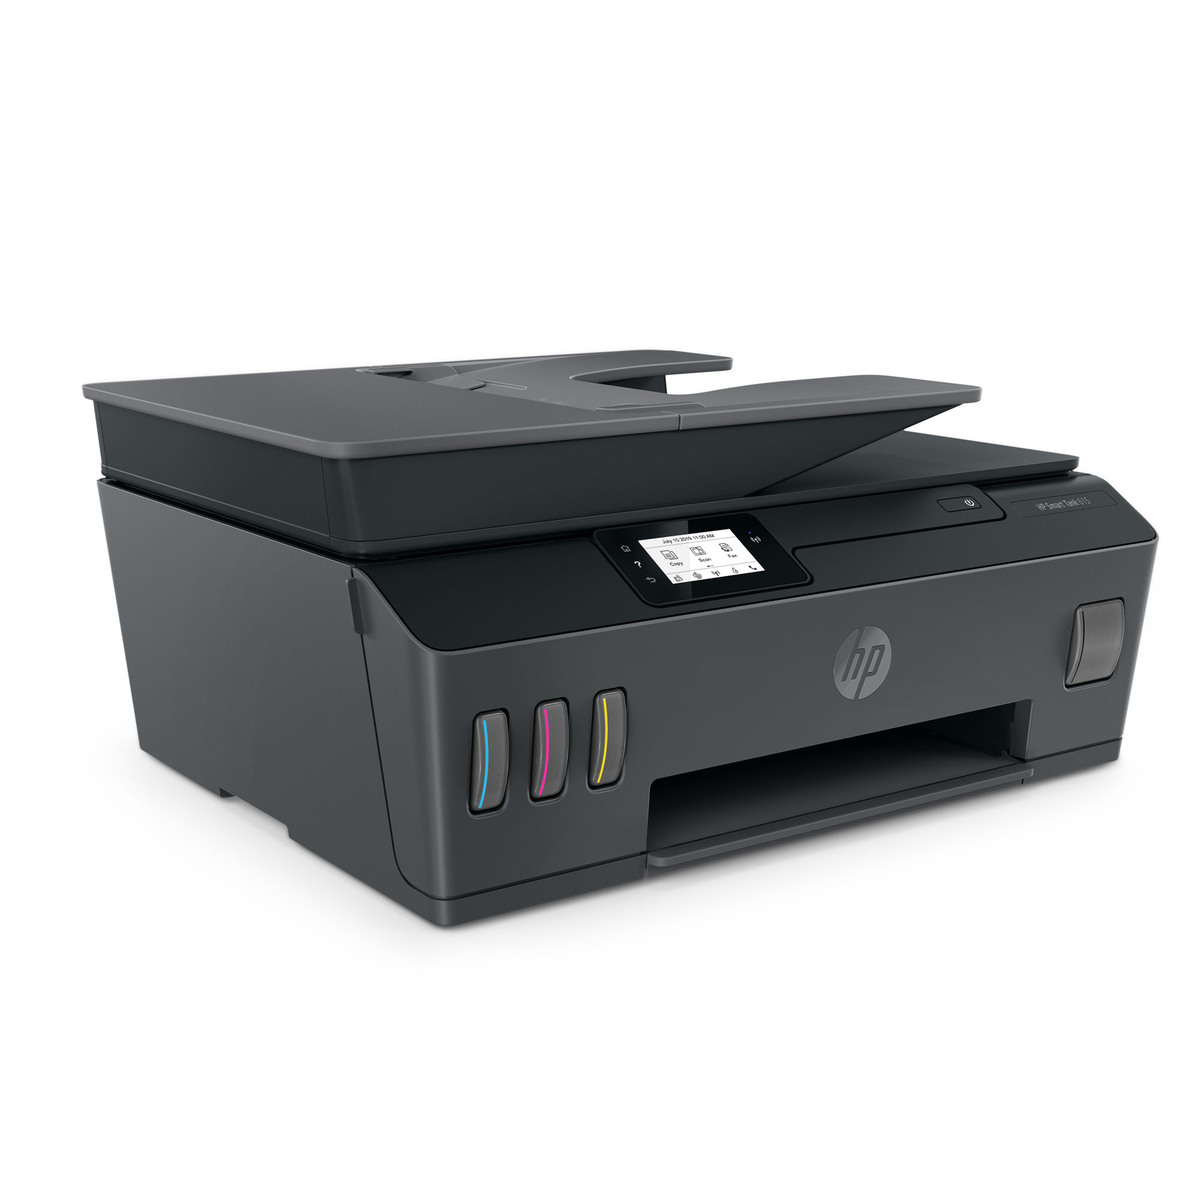 HP Smart Tank 615 All-in-One Wireless Ink Tank Printer (Y0F71A),Black